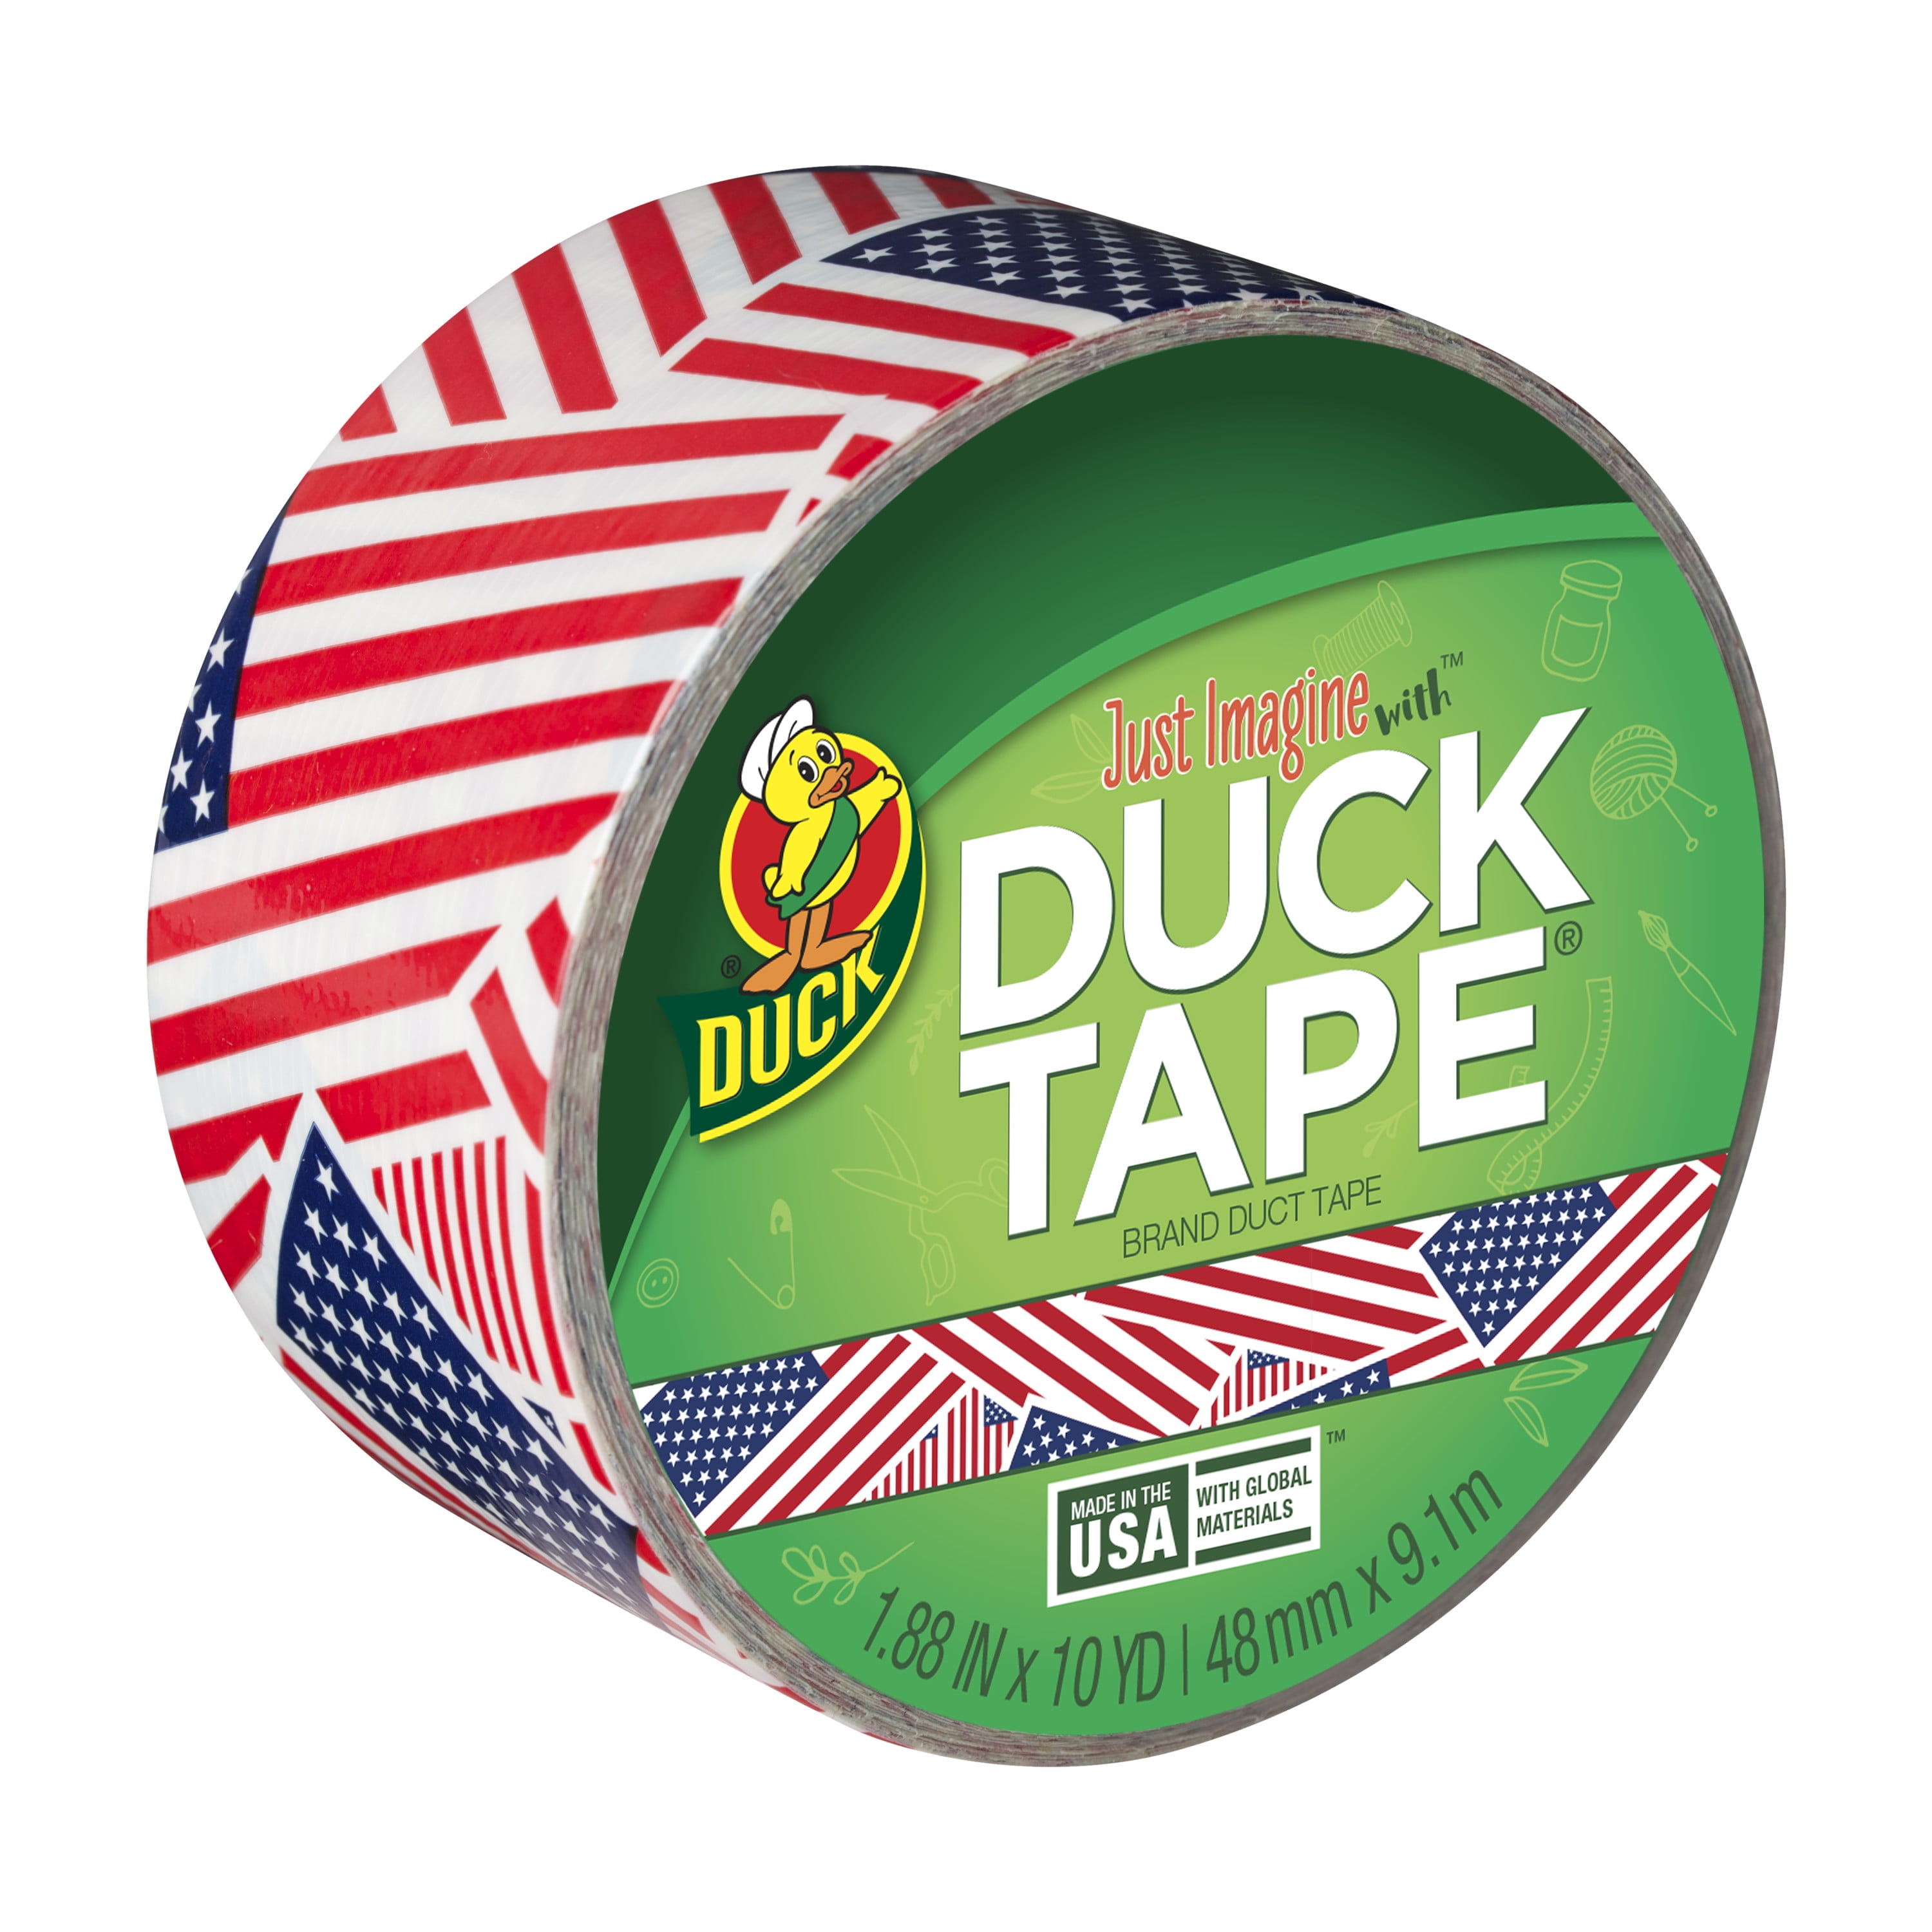 Unicorns Duck brand Duct Tape 1.88 x 10 yard Roll